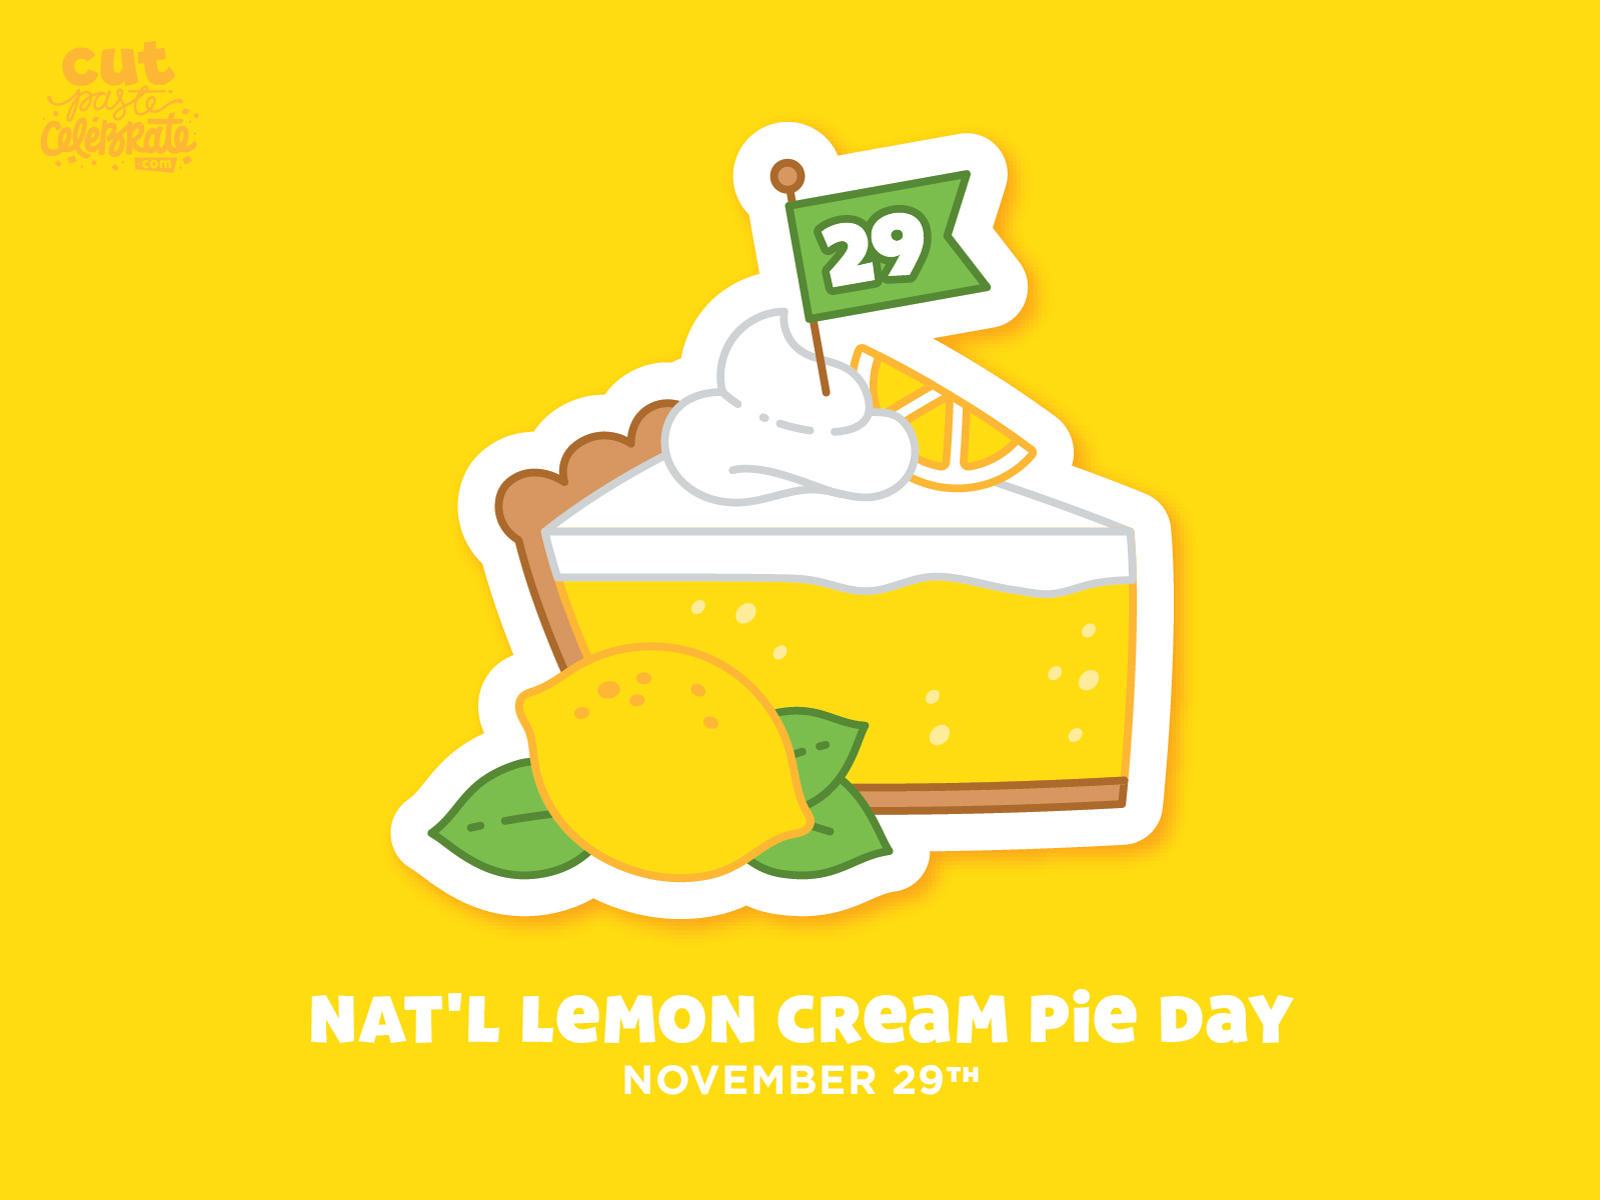 November 29 National Lemon Cream Pie Day by Curt R. Jensen on Dribbble